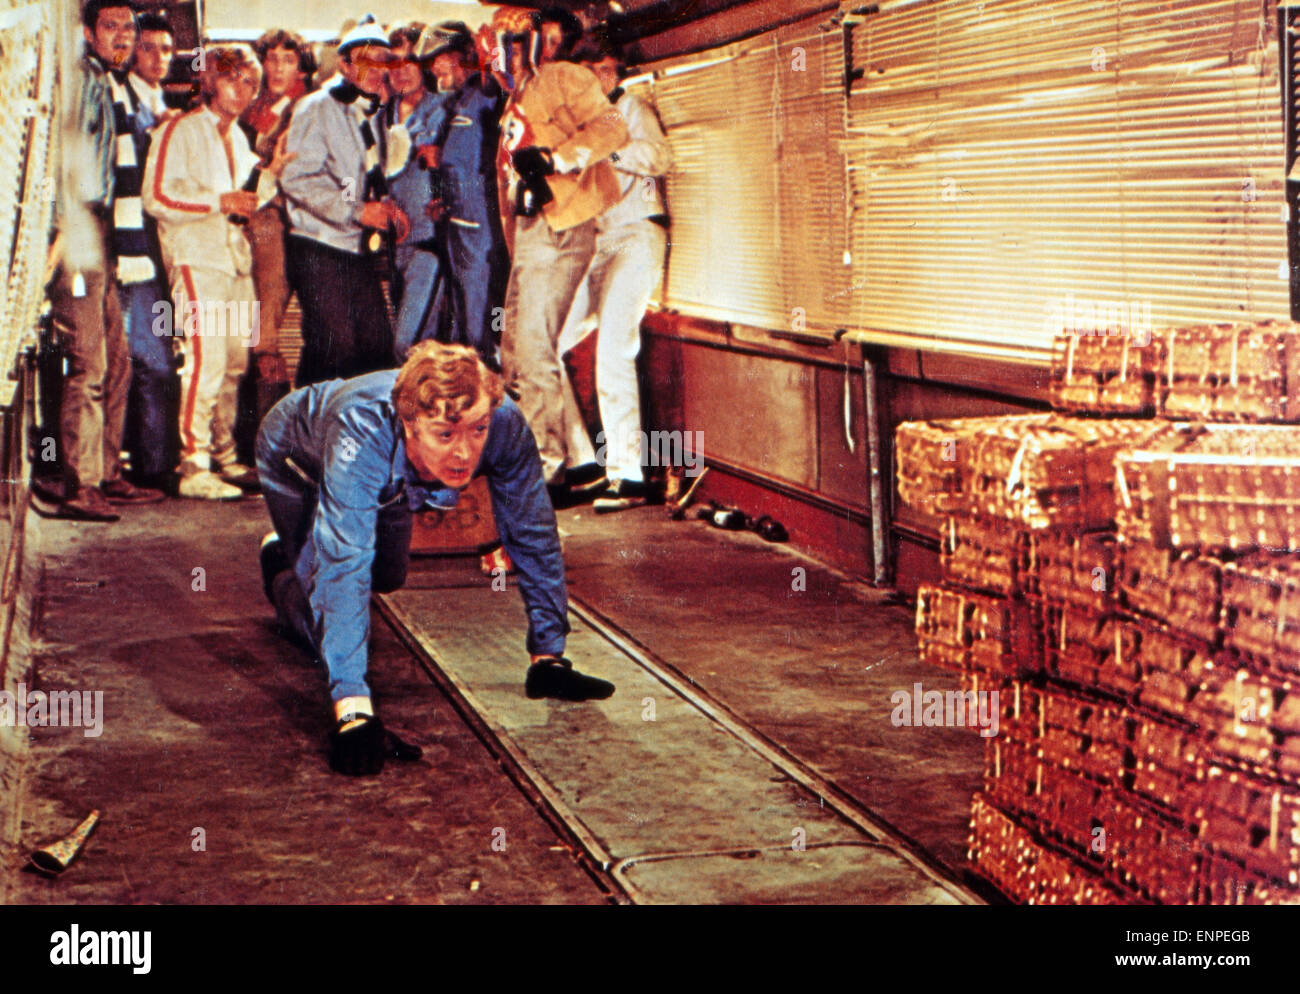 The Italian Job, aka: Charlie staubt Millionen ab, Großbritannien 1969, Regie: Peter Collinson, Darsteller: Michael Caine (am Bo Stock Photo